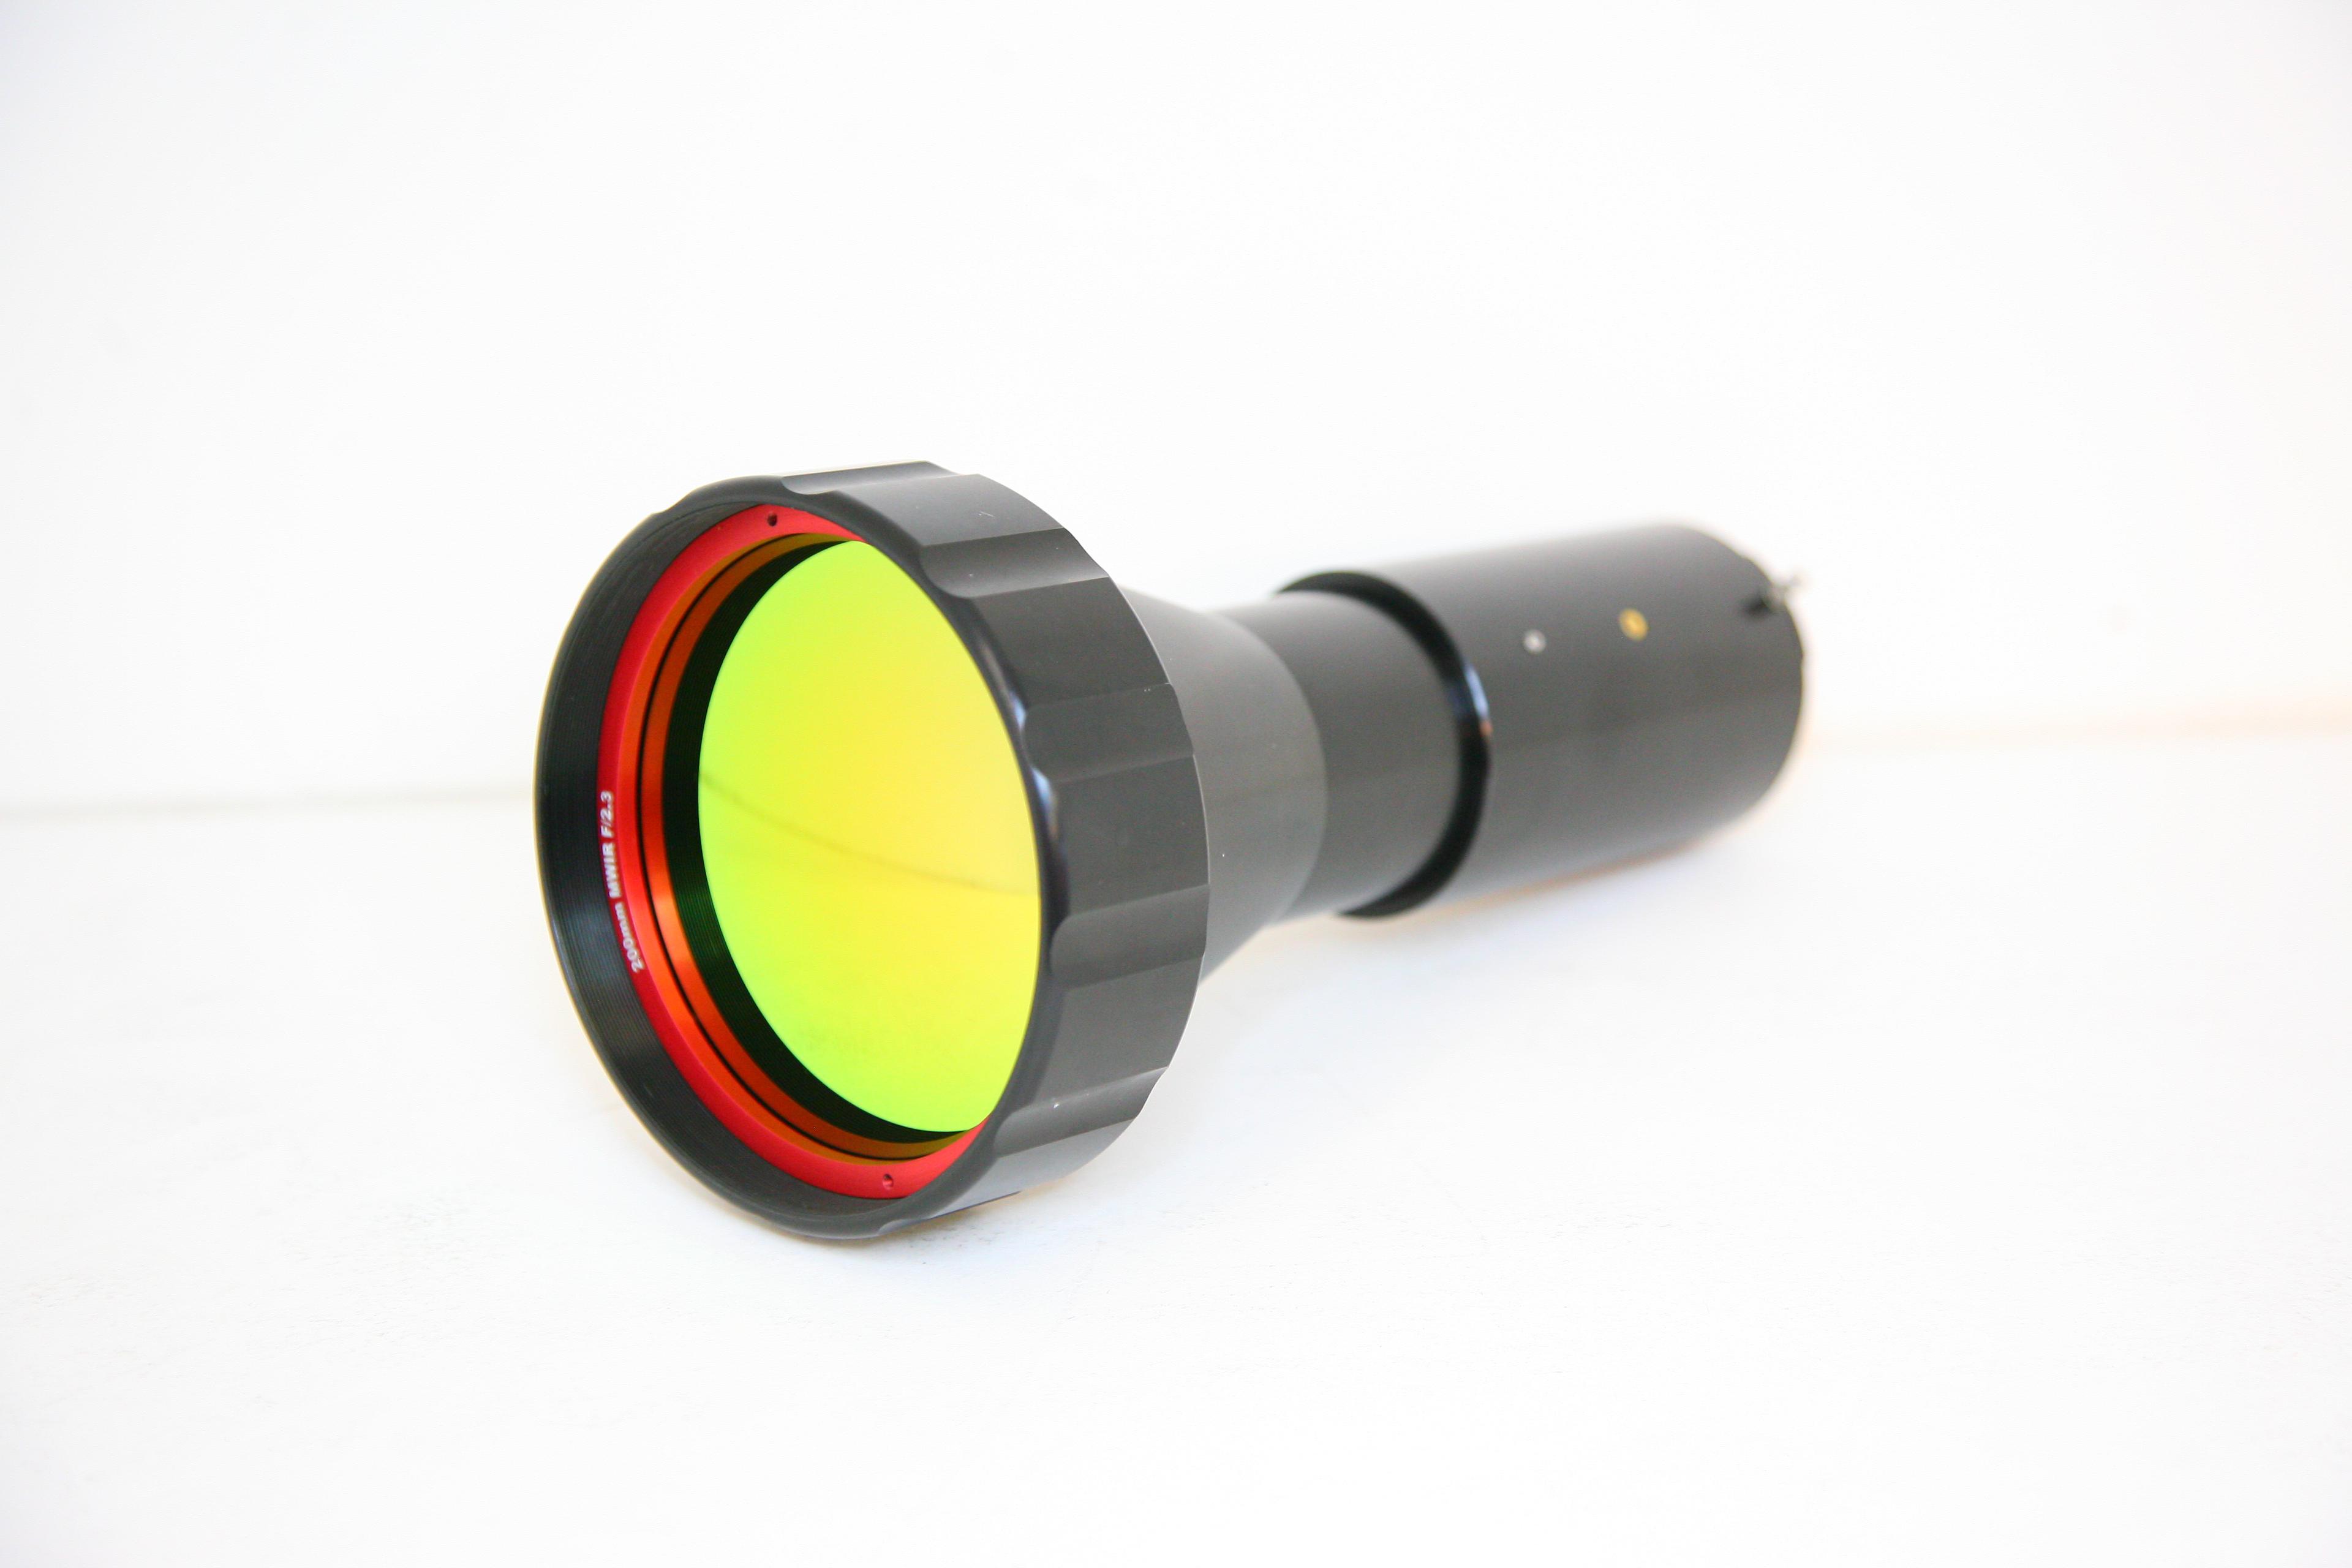 G&H StingRay MWIR 3–5 μm lens